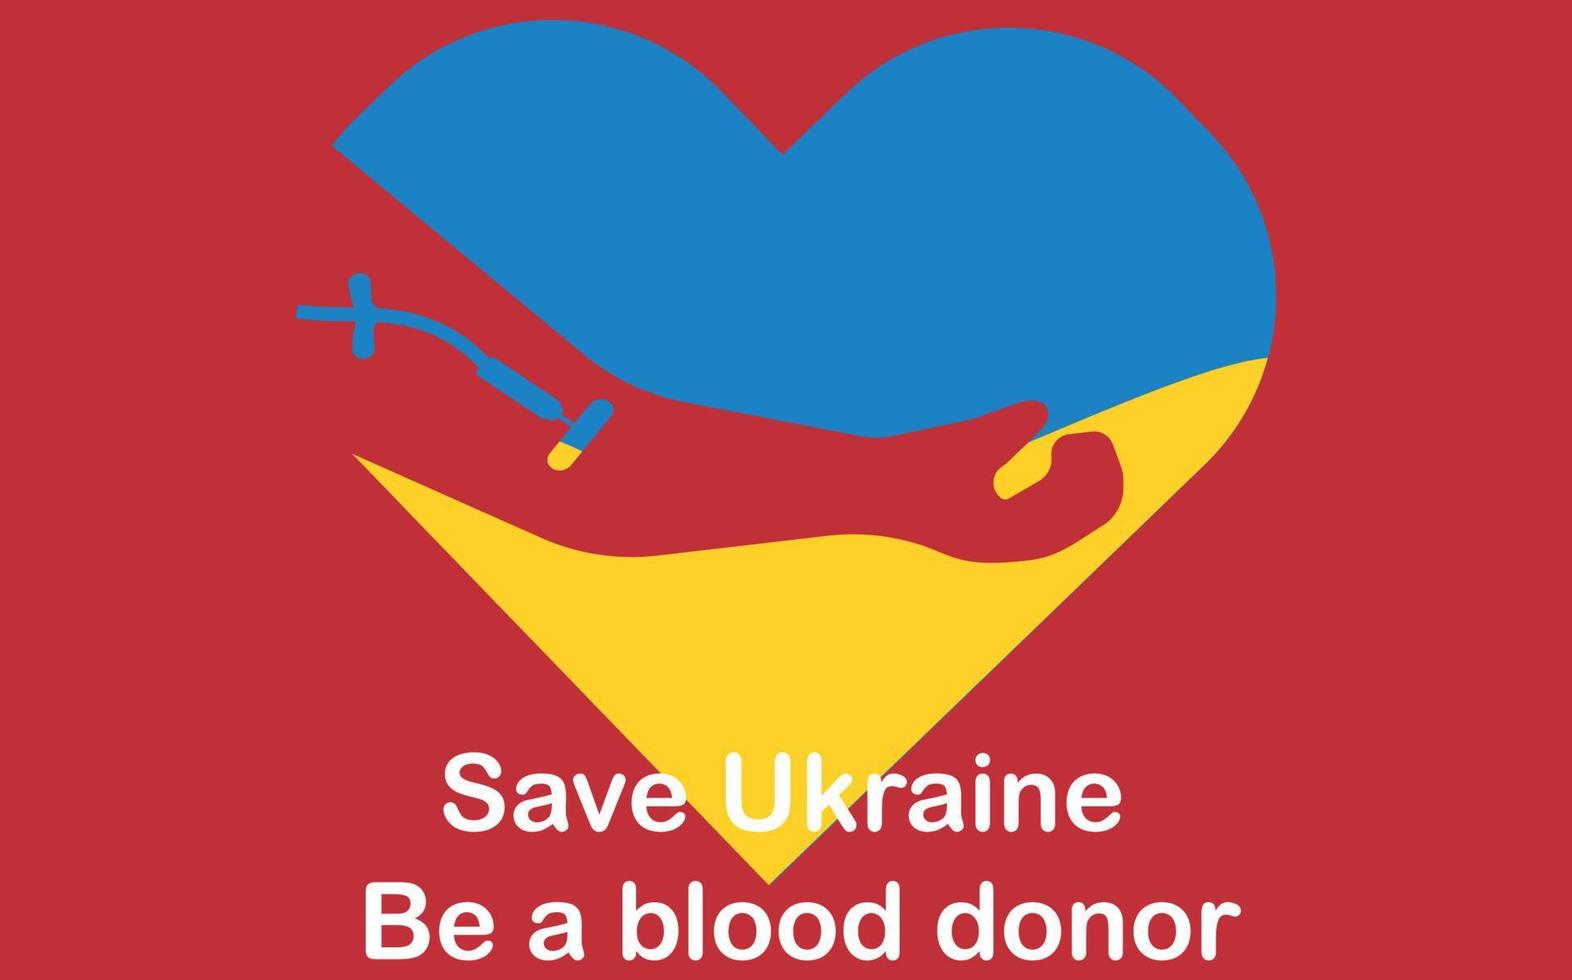 Konzepte der Blutspende. Blutspende in der ukraine. Hand ins Herz. Flagge der Ukraine. Vektor-Illustration vektor